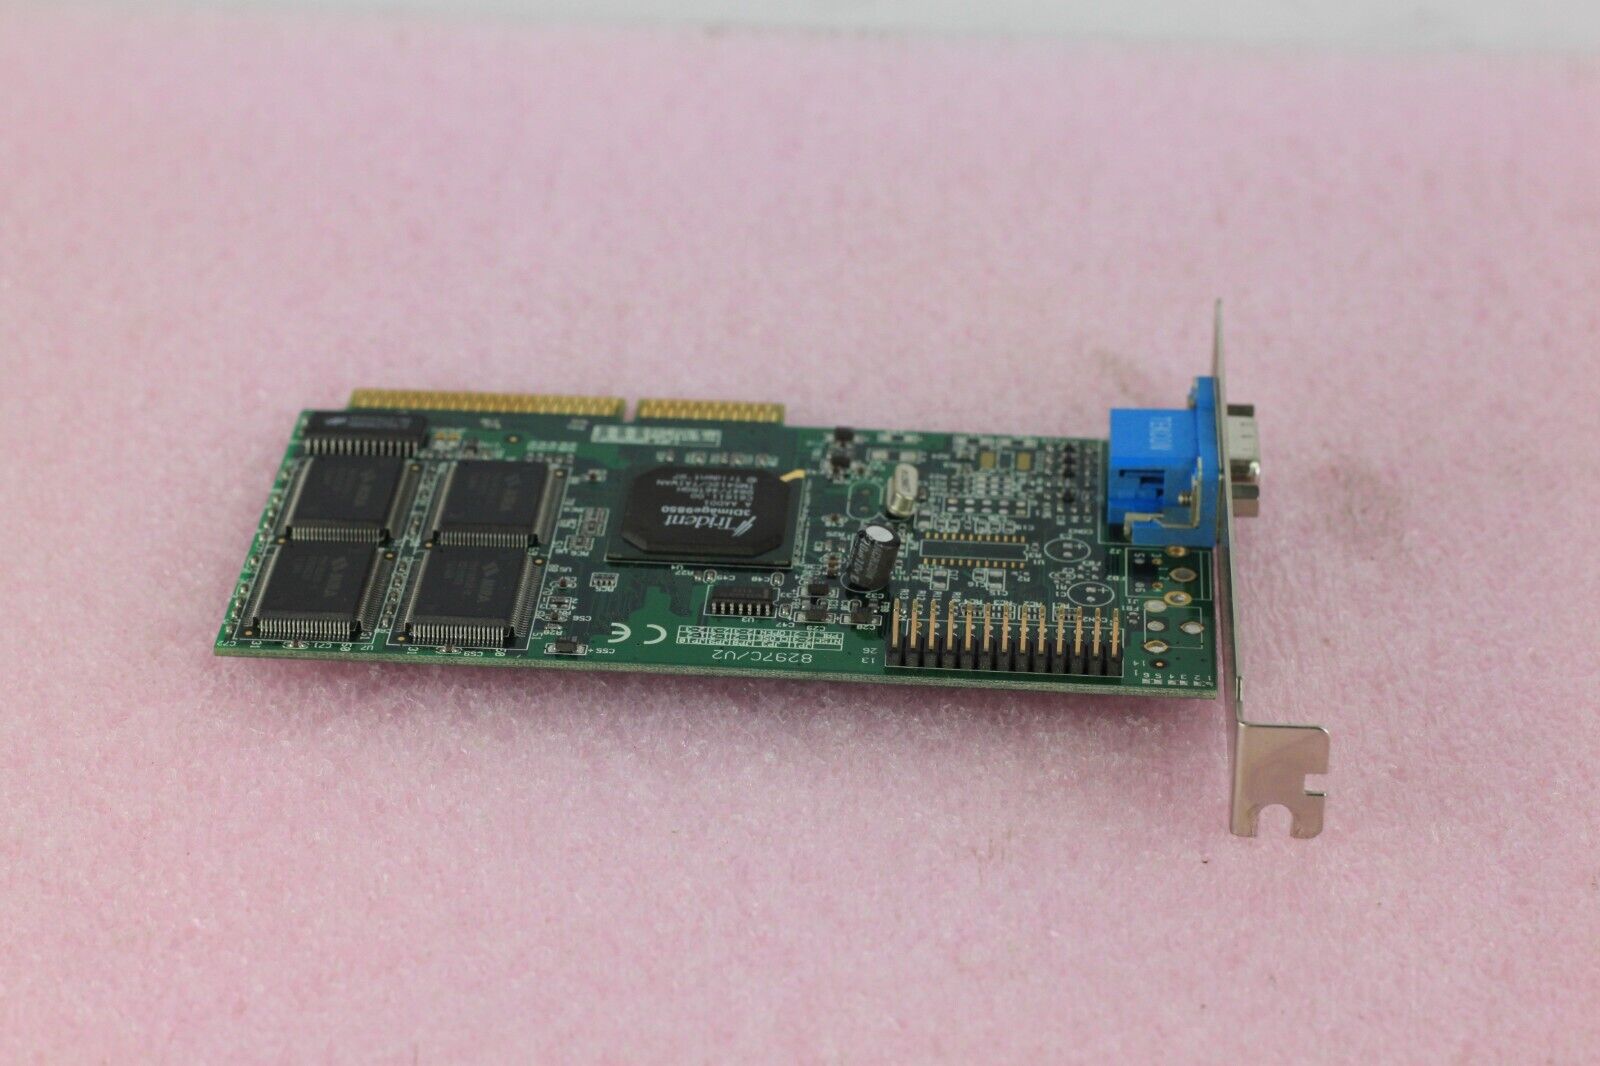 Trident 3DImage 9850 VGA AGP Graphics Card